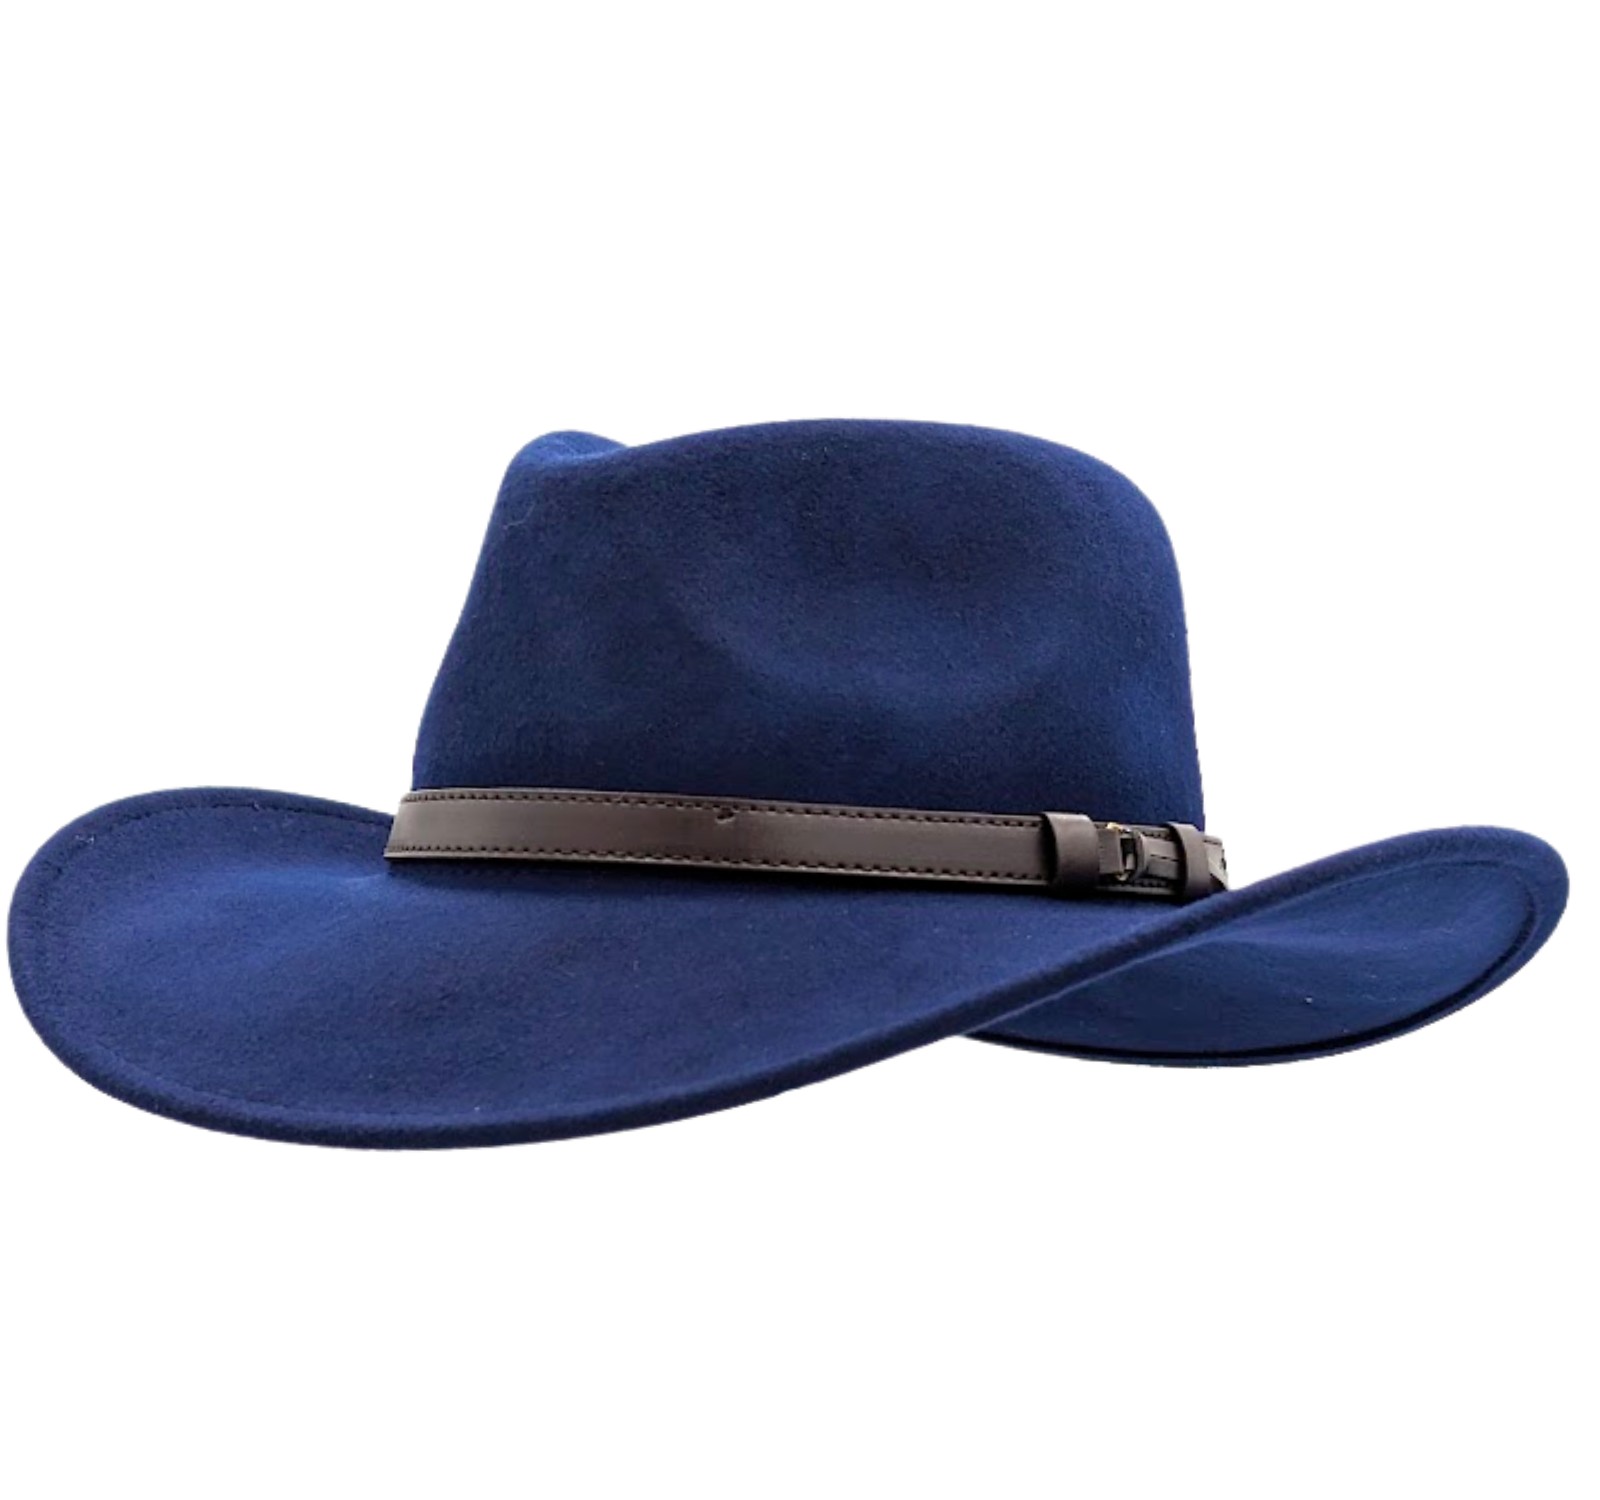 Stansmore Straw Cowboy Hat